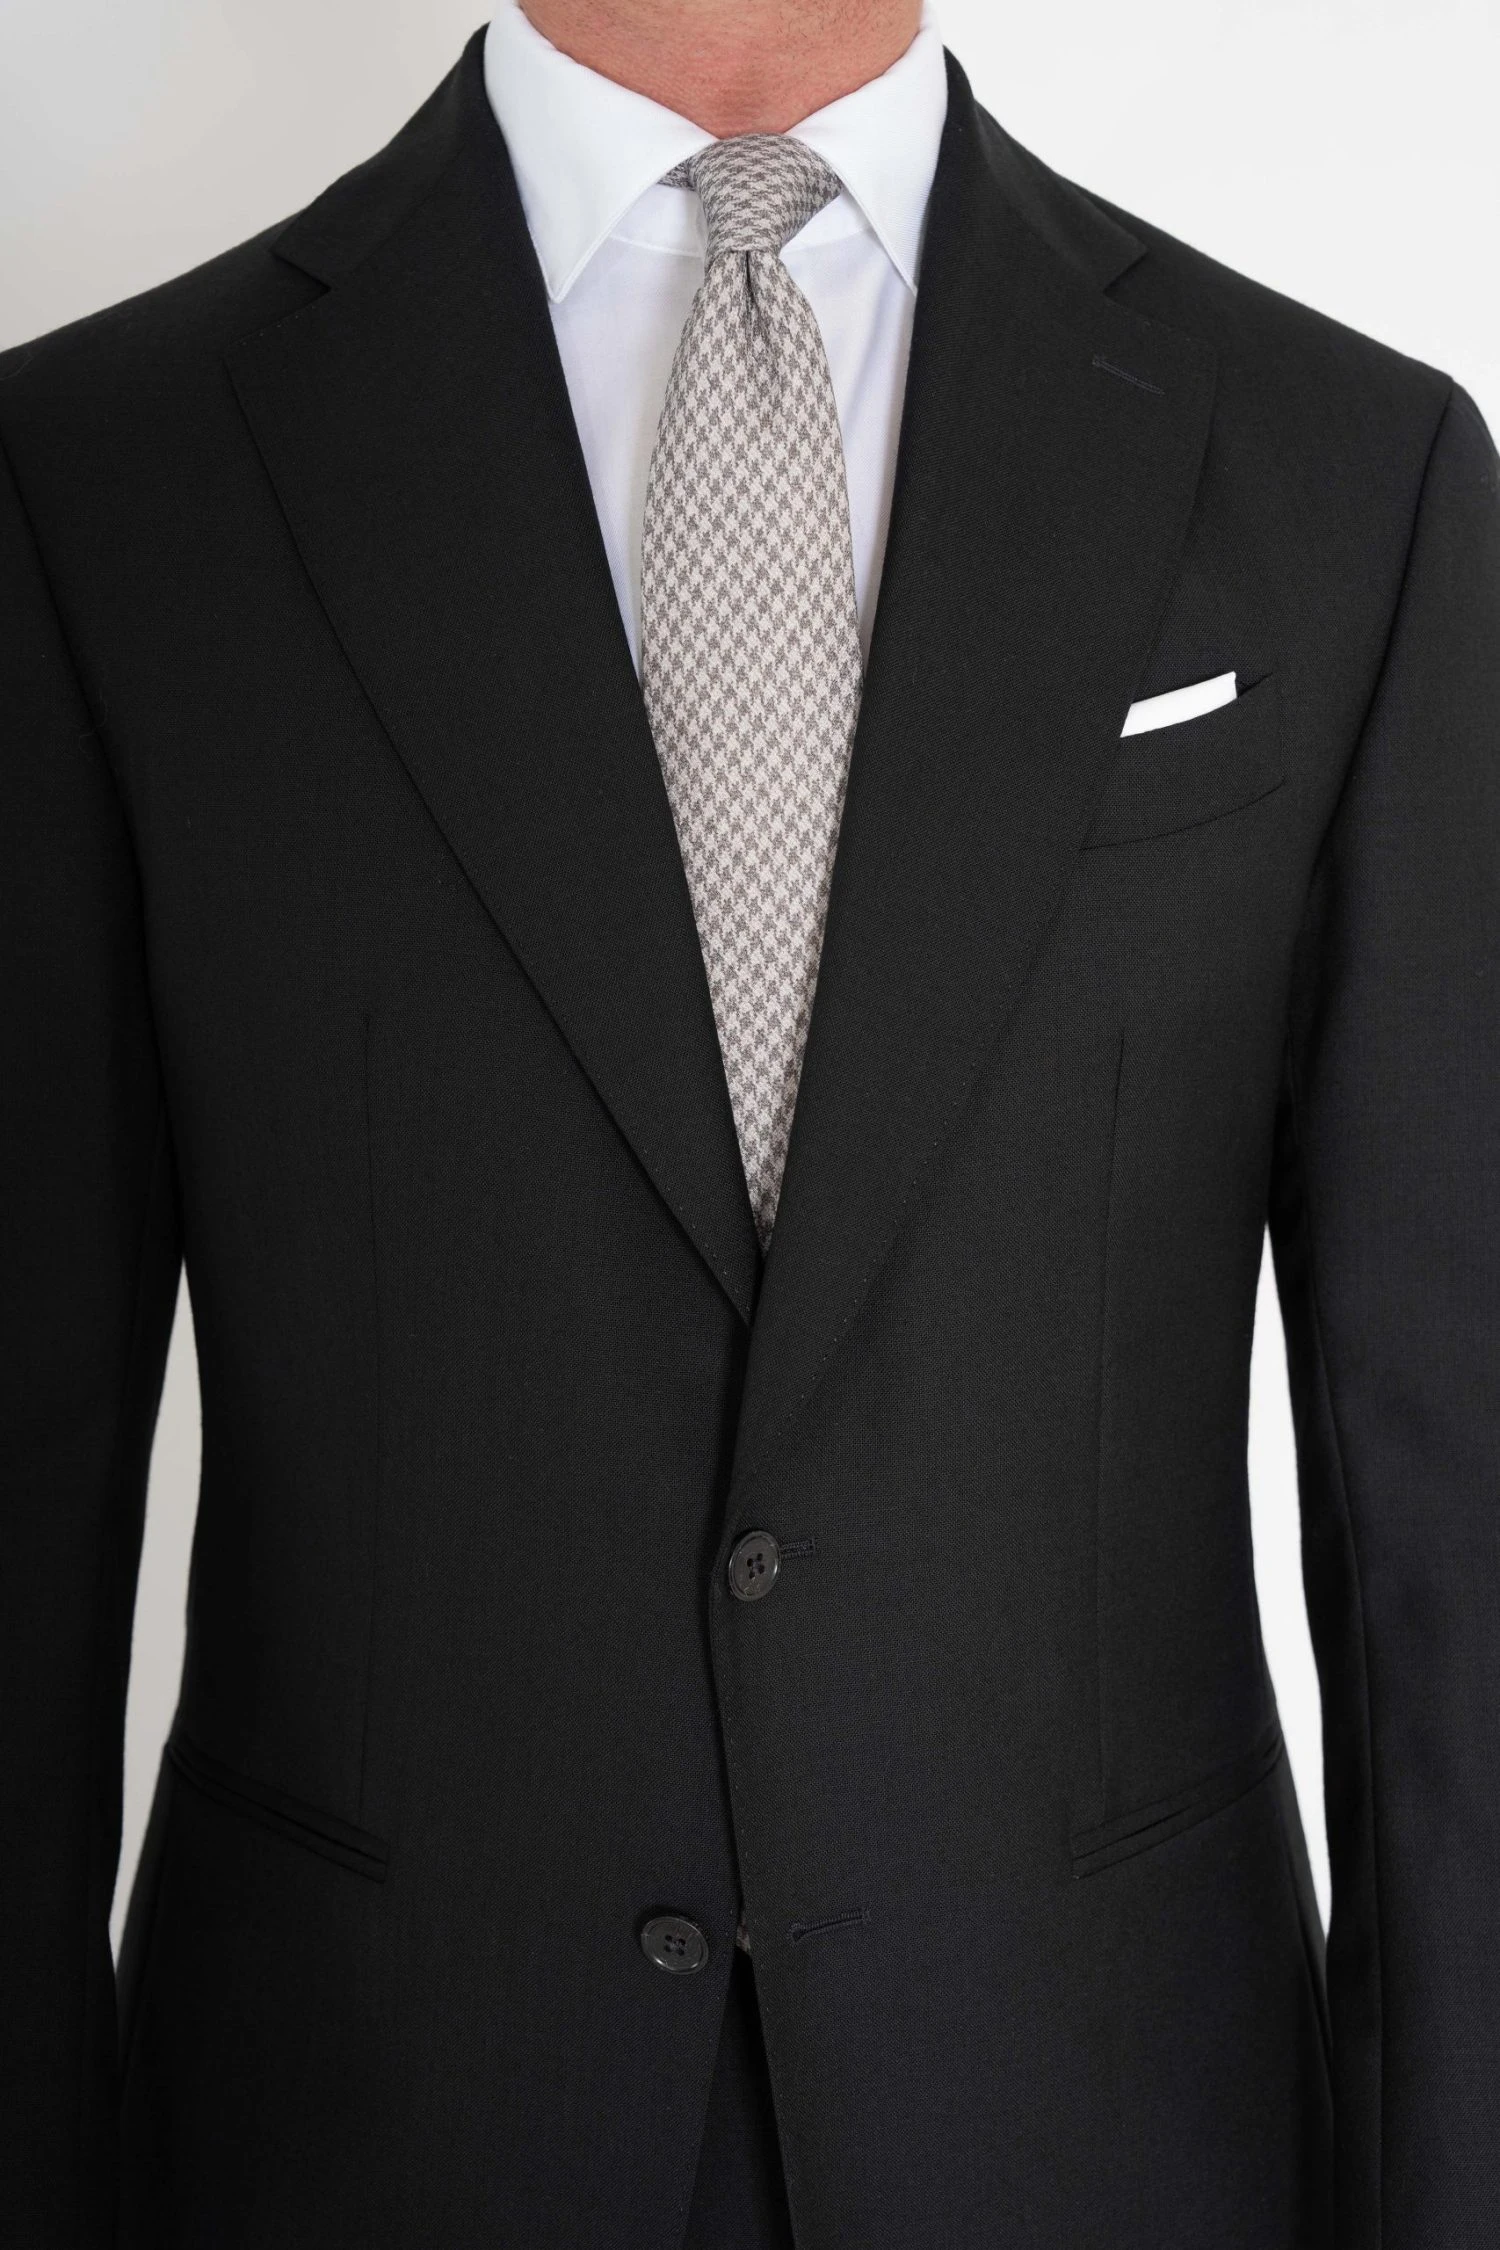 1 Black Twistair suit by mond of copenhagen compressed